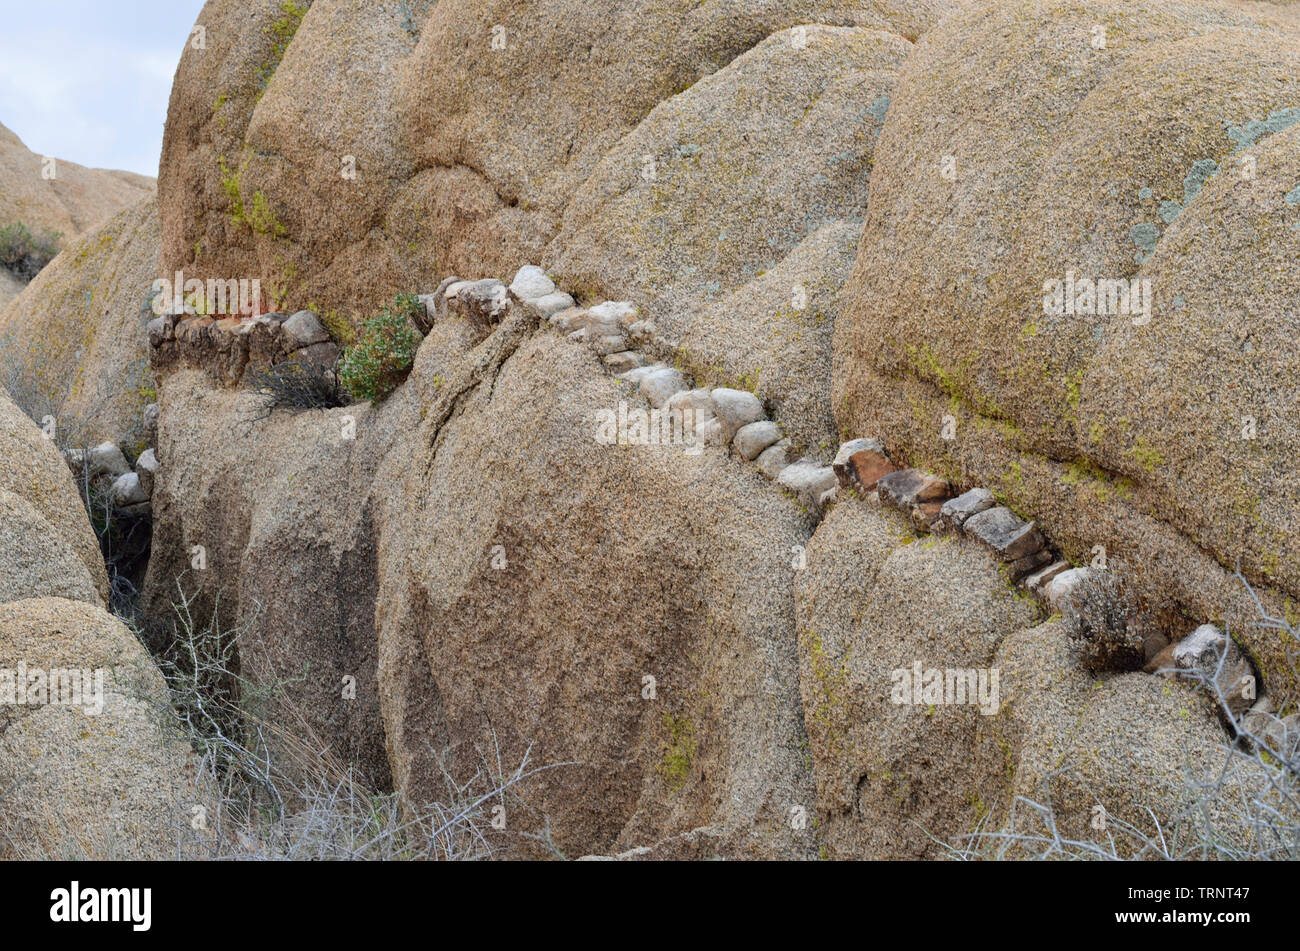 Monzogranite rock con vena Aplitic (invadente roccia ignea), Jumbo Rocks, Joshua Tree National Park, CA, Stati Uniti d'America 180312 7348 Foto Stock